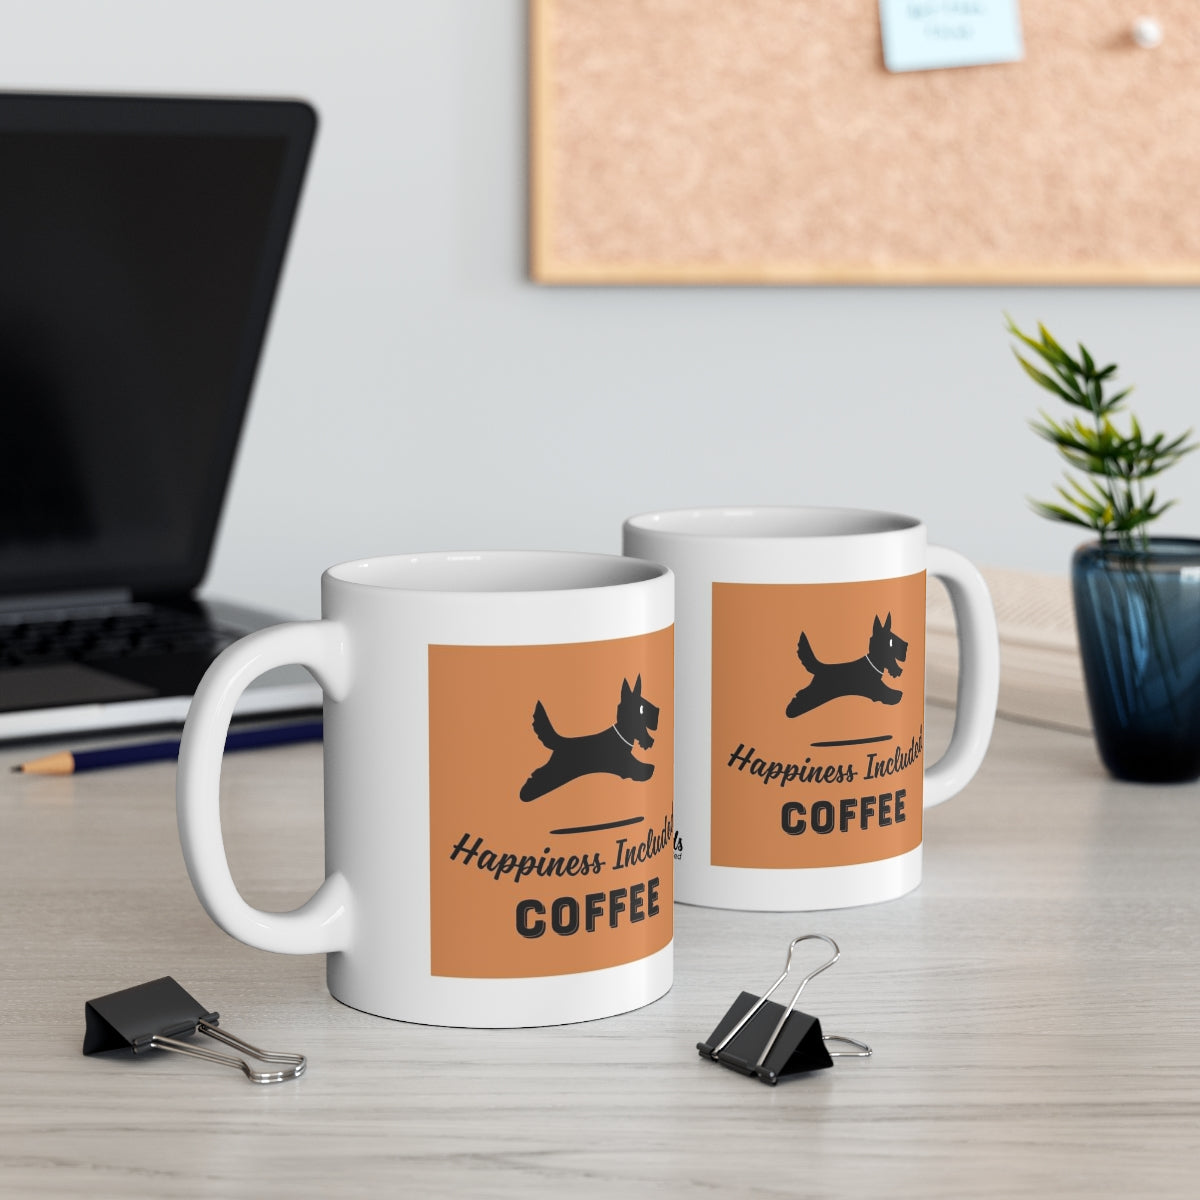 Happiness Included Coffee Mug Acorn